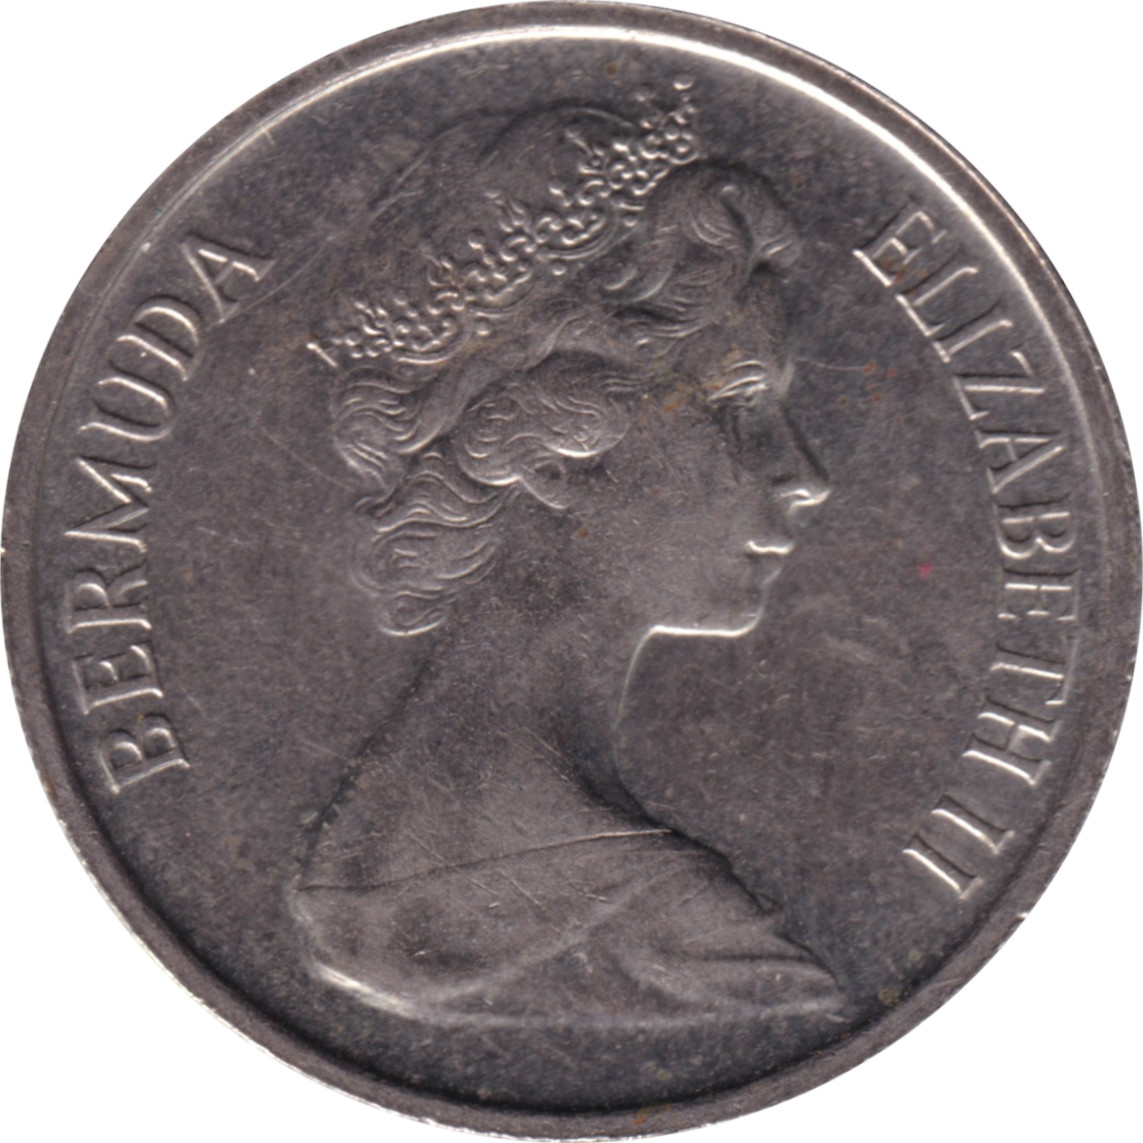 25 cents - Elizabeth II - Buste jeune